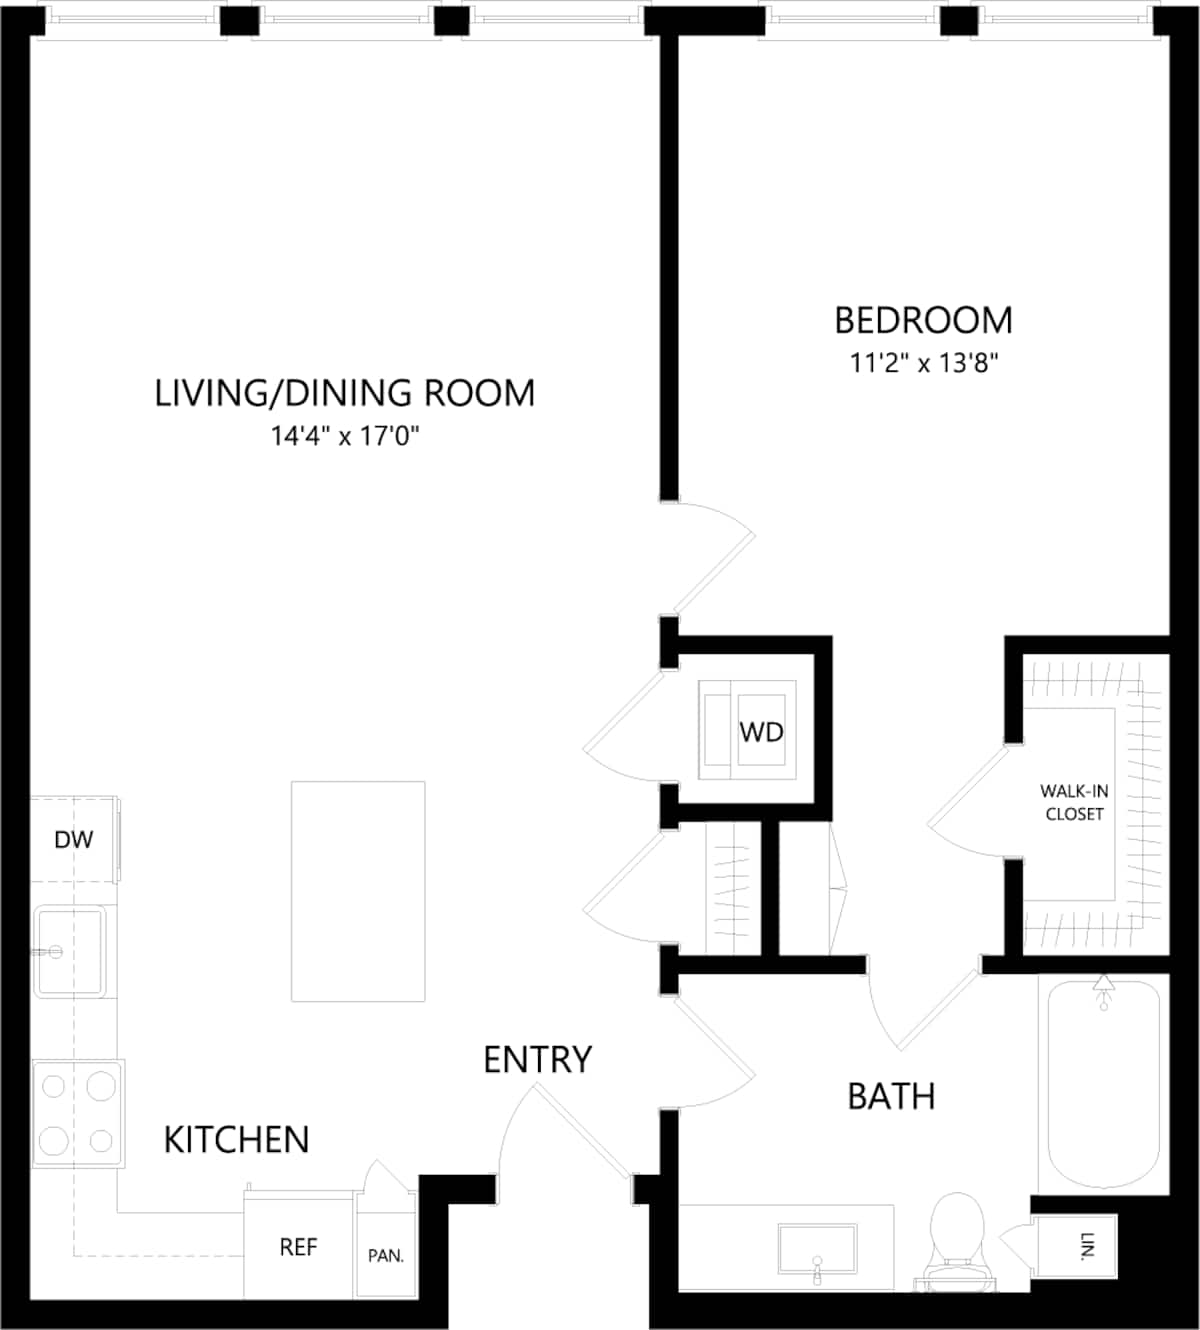 Floorplan diagram for A7.2, showing 1 bedroom